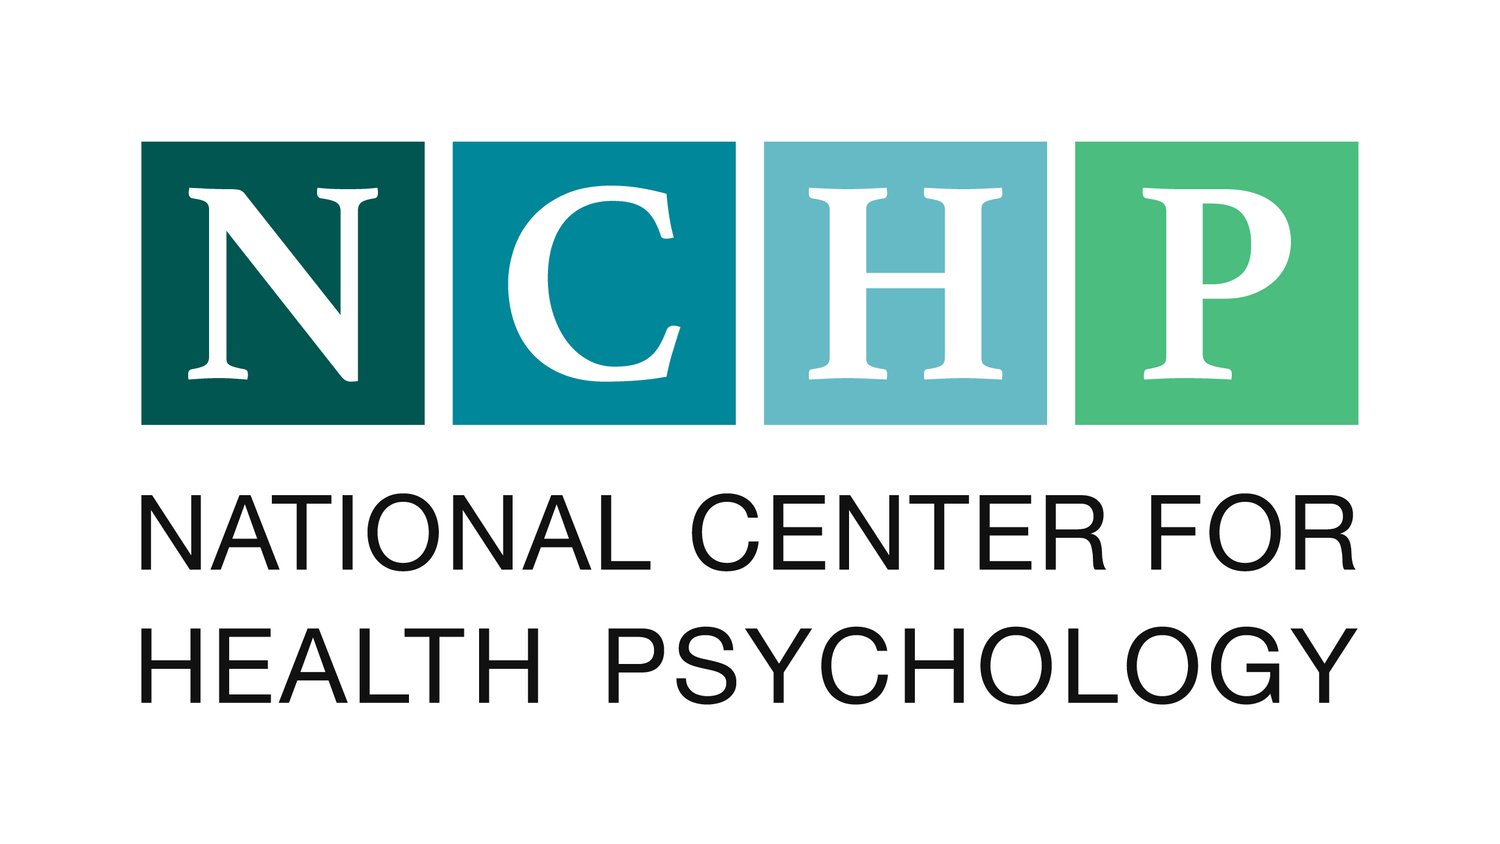 National Center for Health Psychology